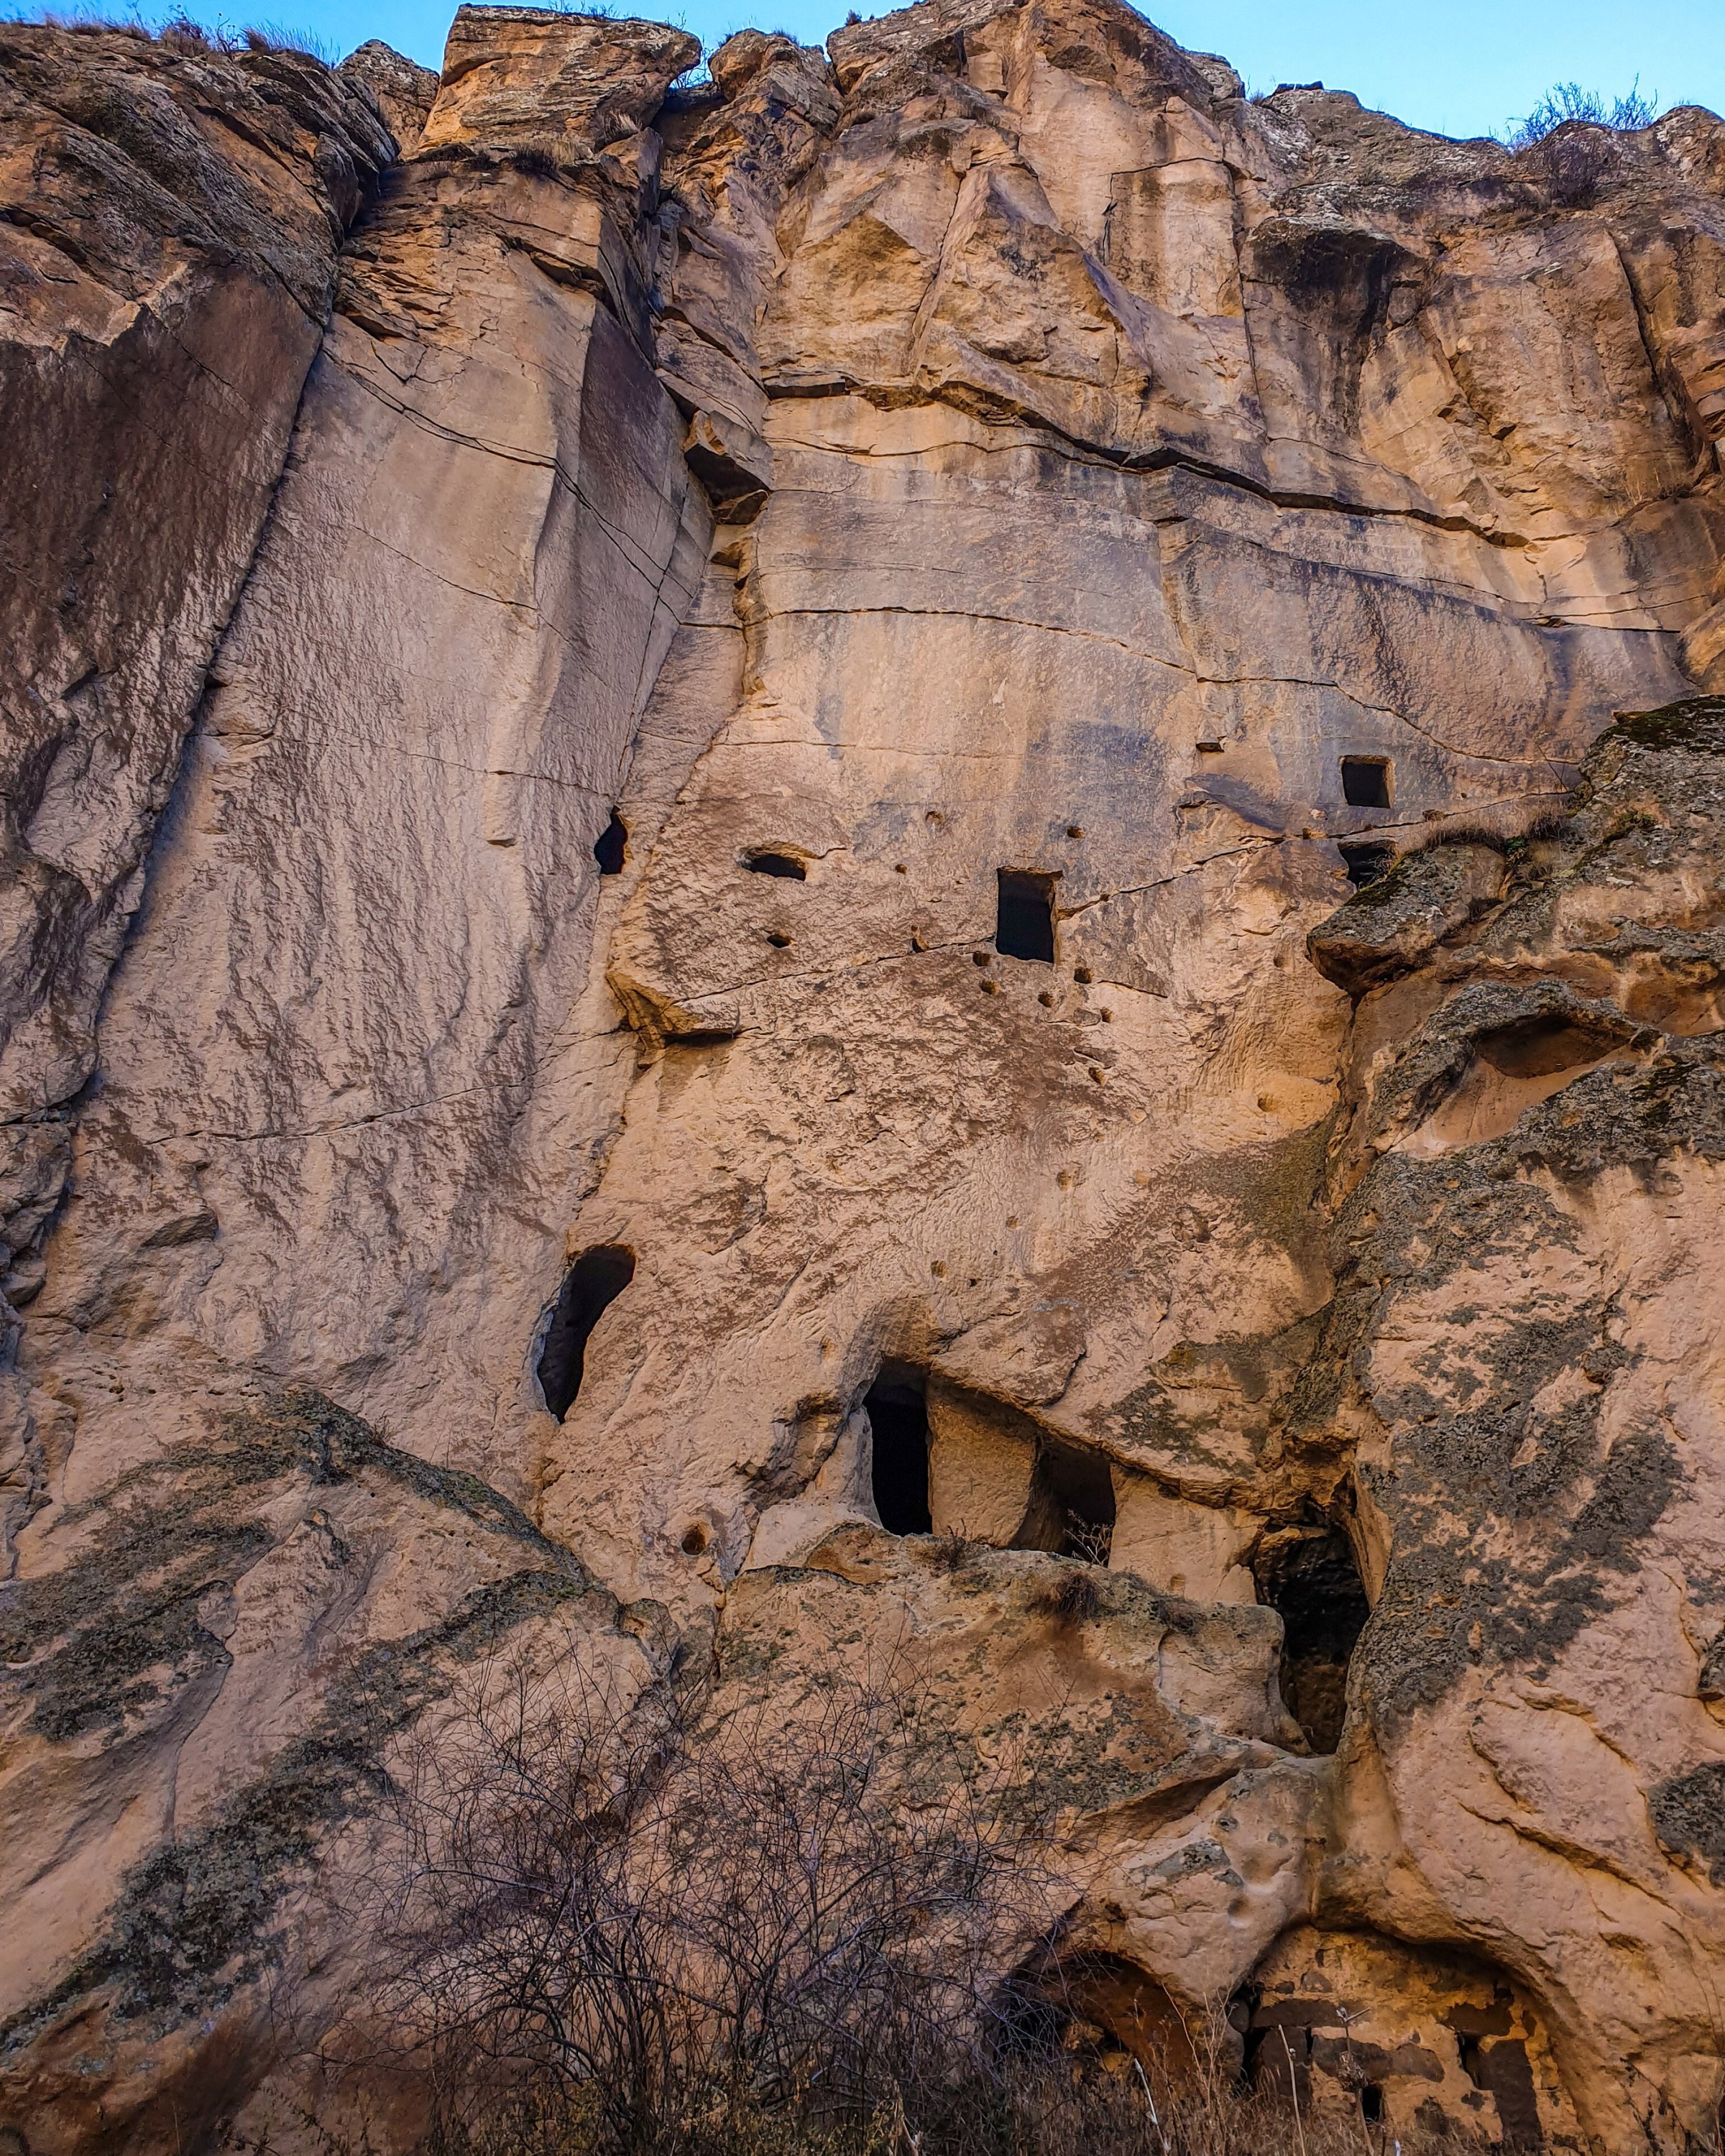 The windows of the rock-hewn structures in Ihlara Valley. (Photo by Argun Konuk)